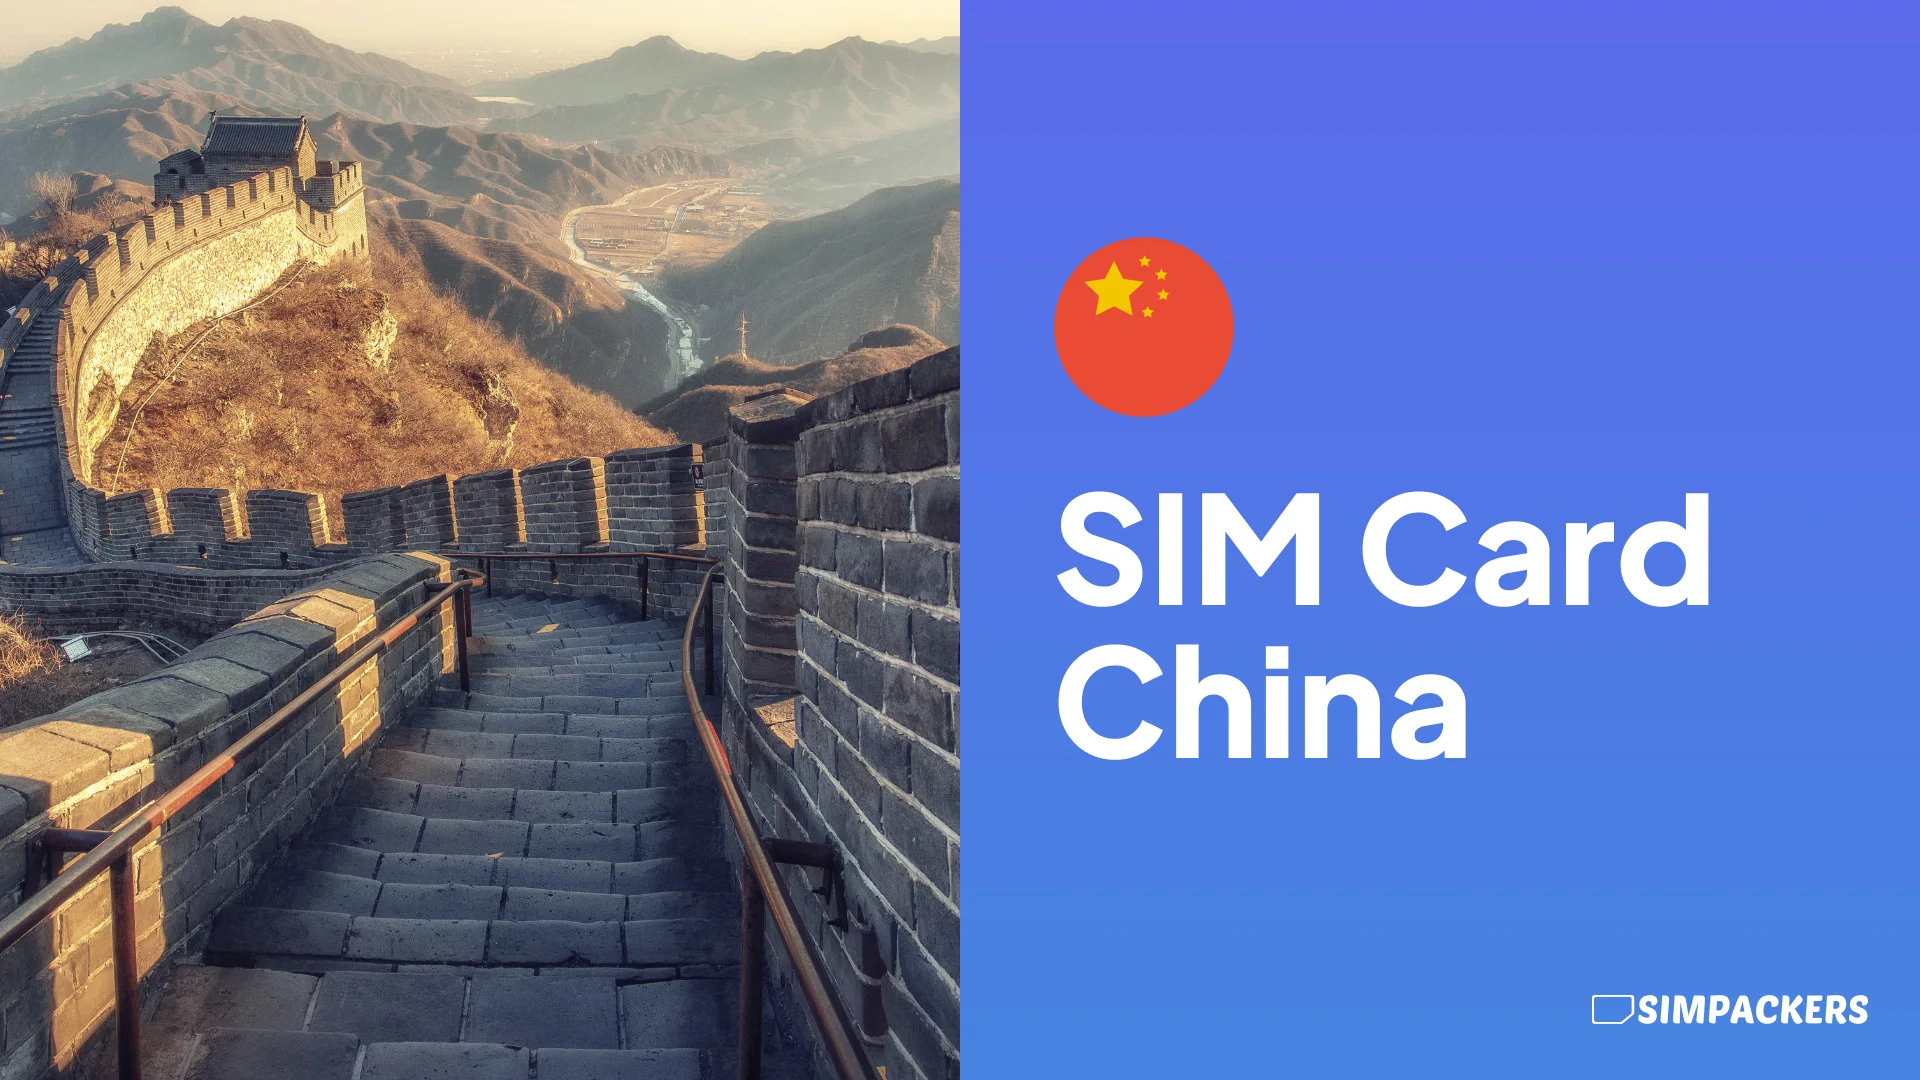 EN/FEATURED_IMAGES/sim-card-china.webp